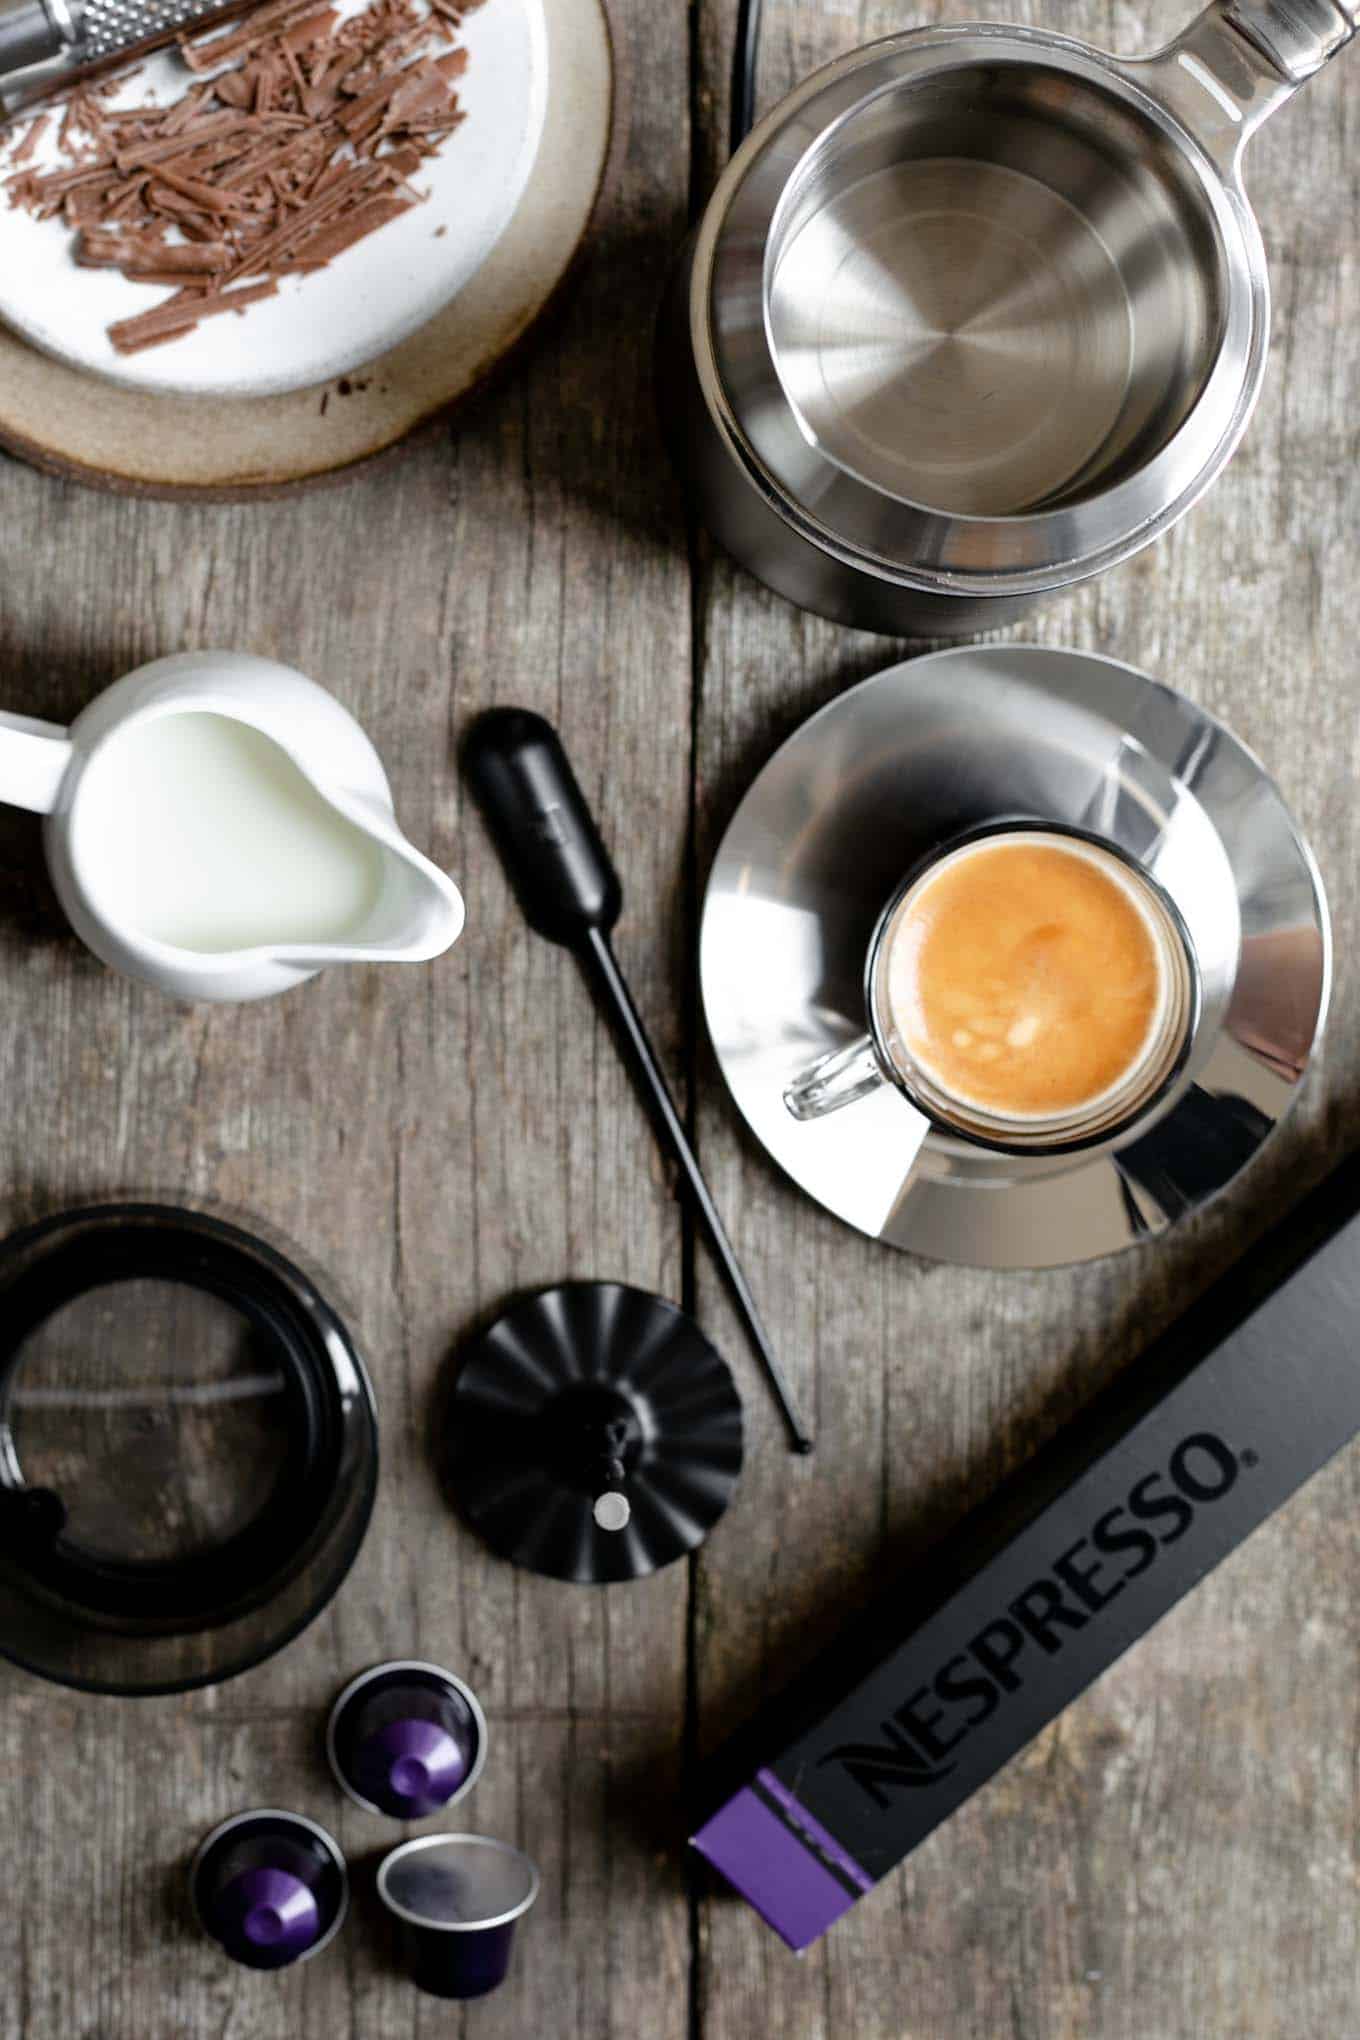 Nespresso Barista coffee recipes #coffee #icednitro #cafeviennois | via @annabanana.co